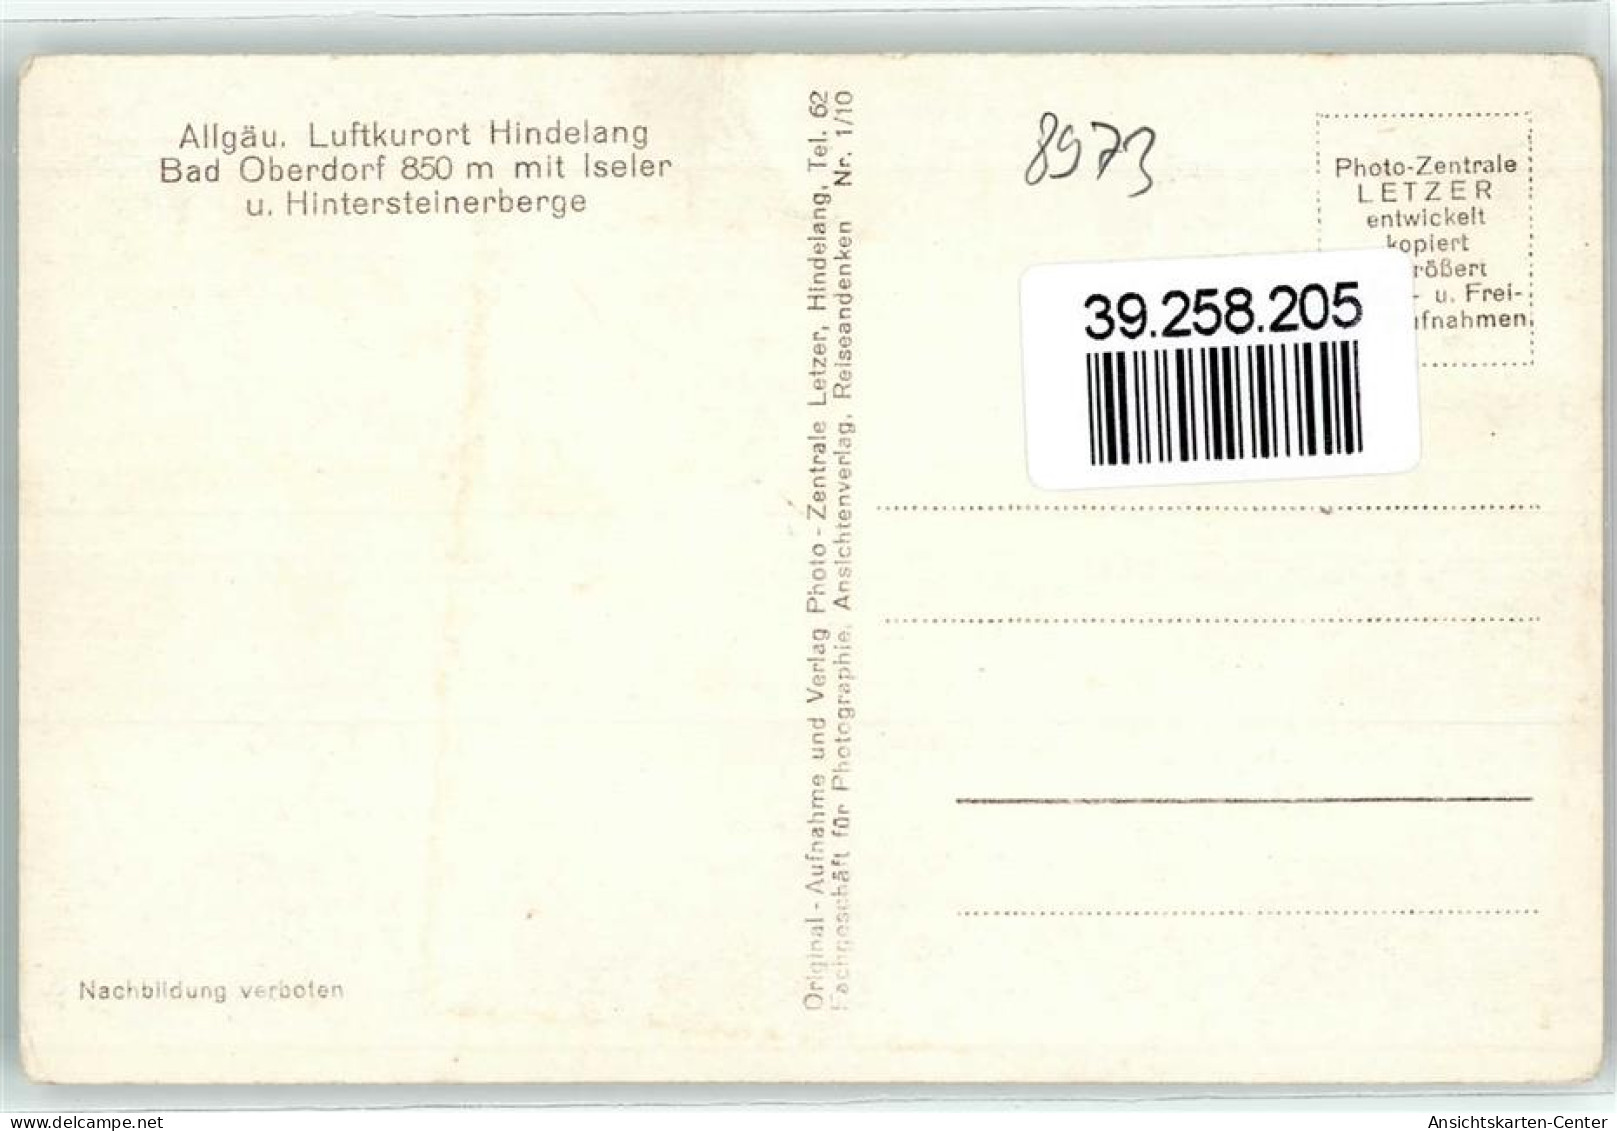 39258205 - Bad Oberdorf - Hindelang